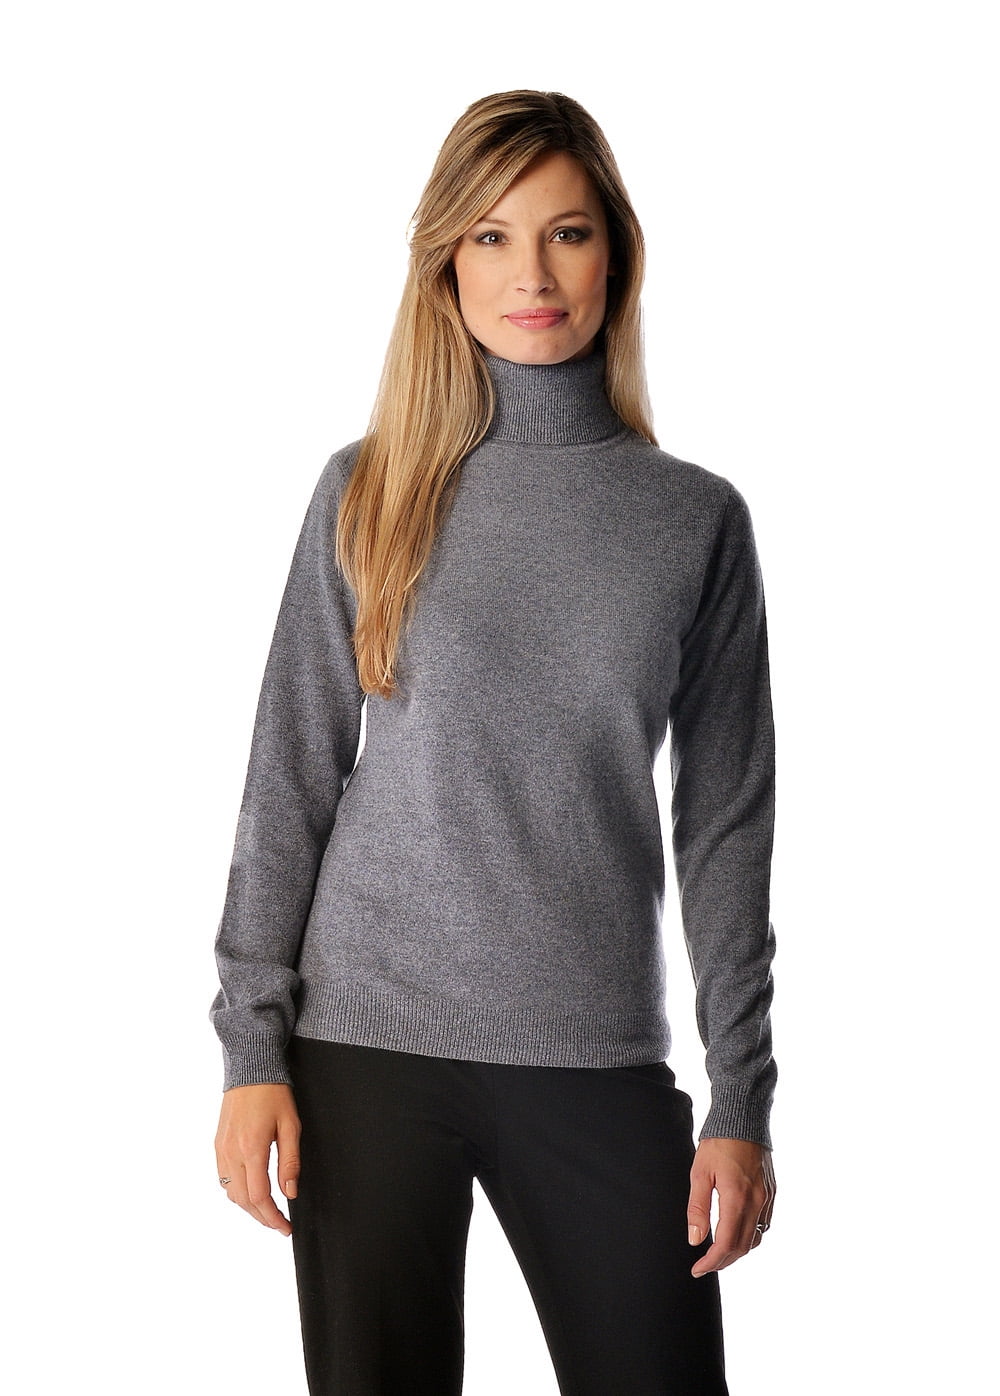 Cashmere Boutique: Women's 100% Pure Cashmere Turtle Neck Sweater (Color:  Charcoal Gray, Size: Small) - Walmart.com